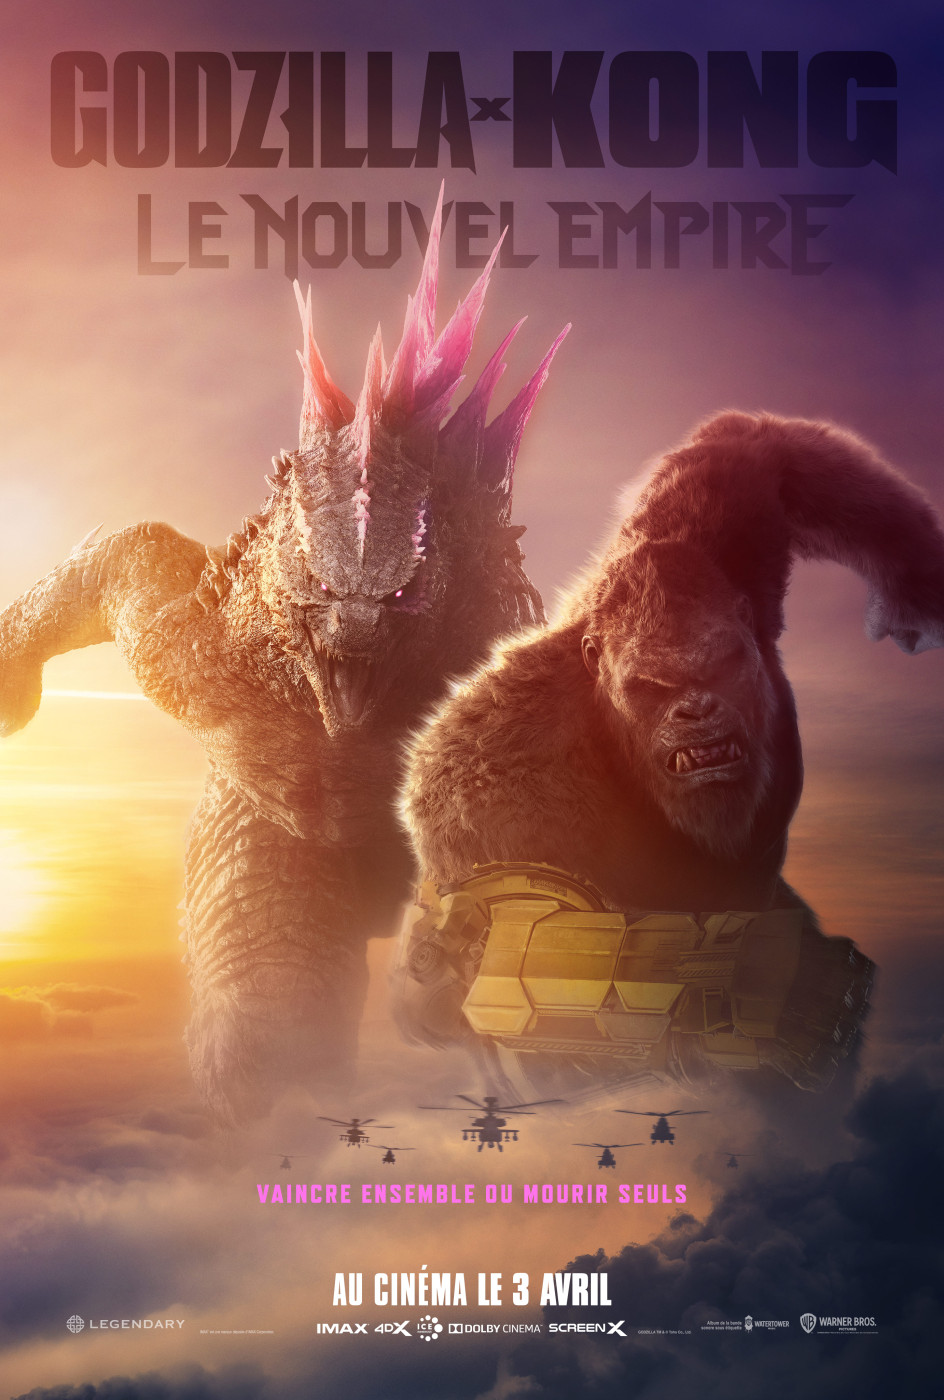 Godzilla x Kong The New Empire Artwork chf FR GXK FRENCH VERT MAIN 2764x4096 INTL 1